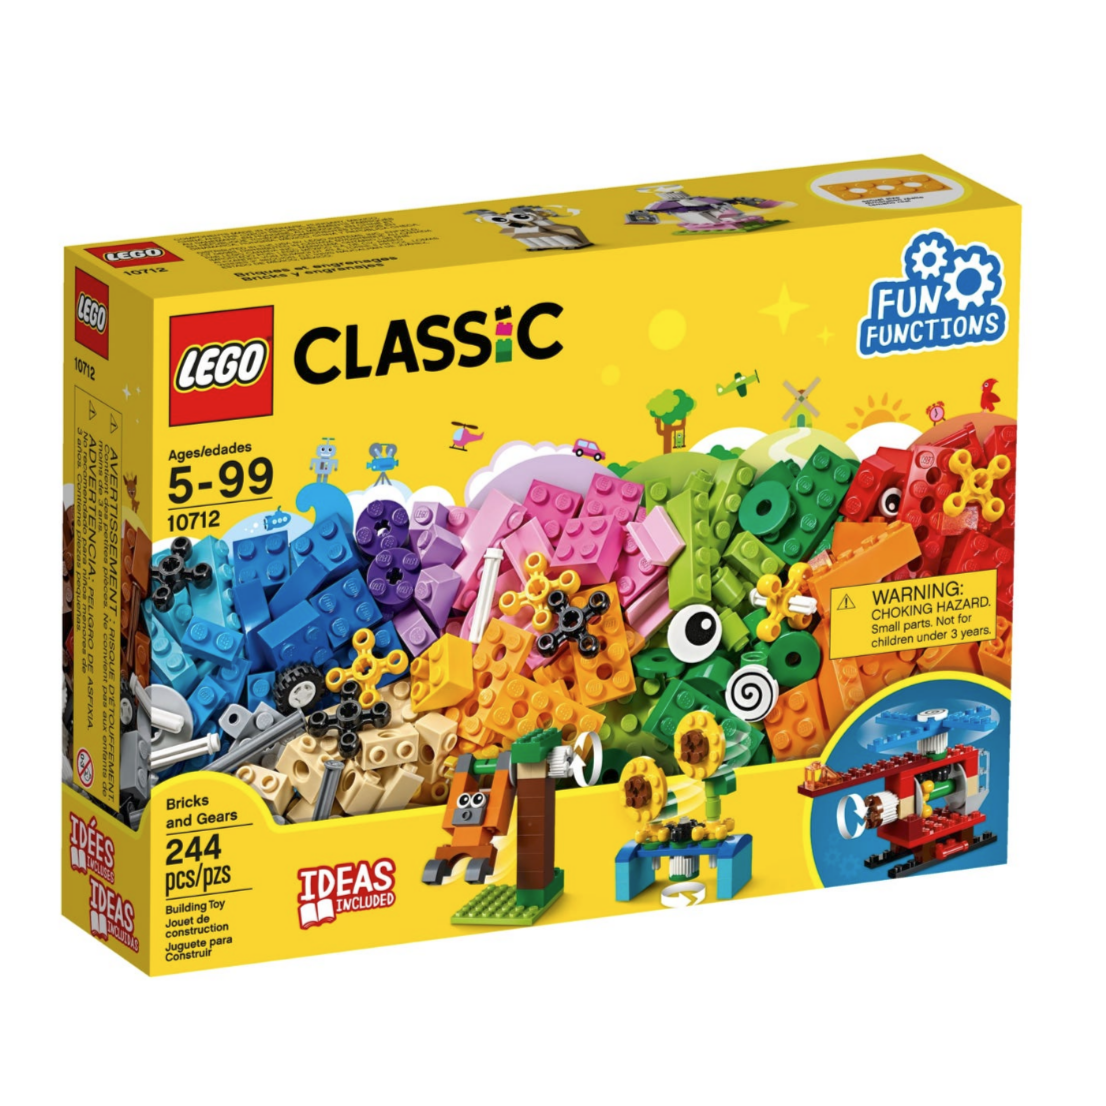 Joc de constructie, Caramizi si roti variate, L10712, Lego Clasic